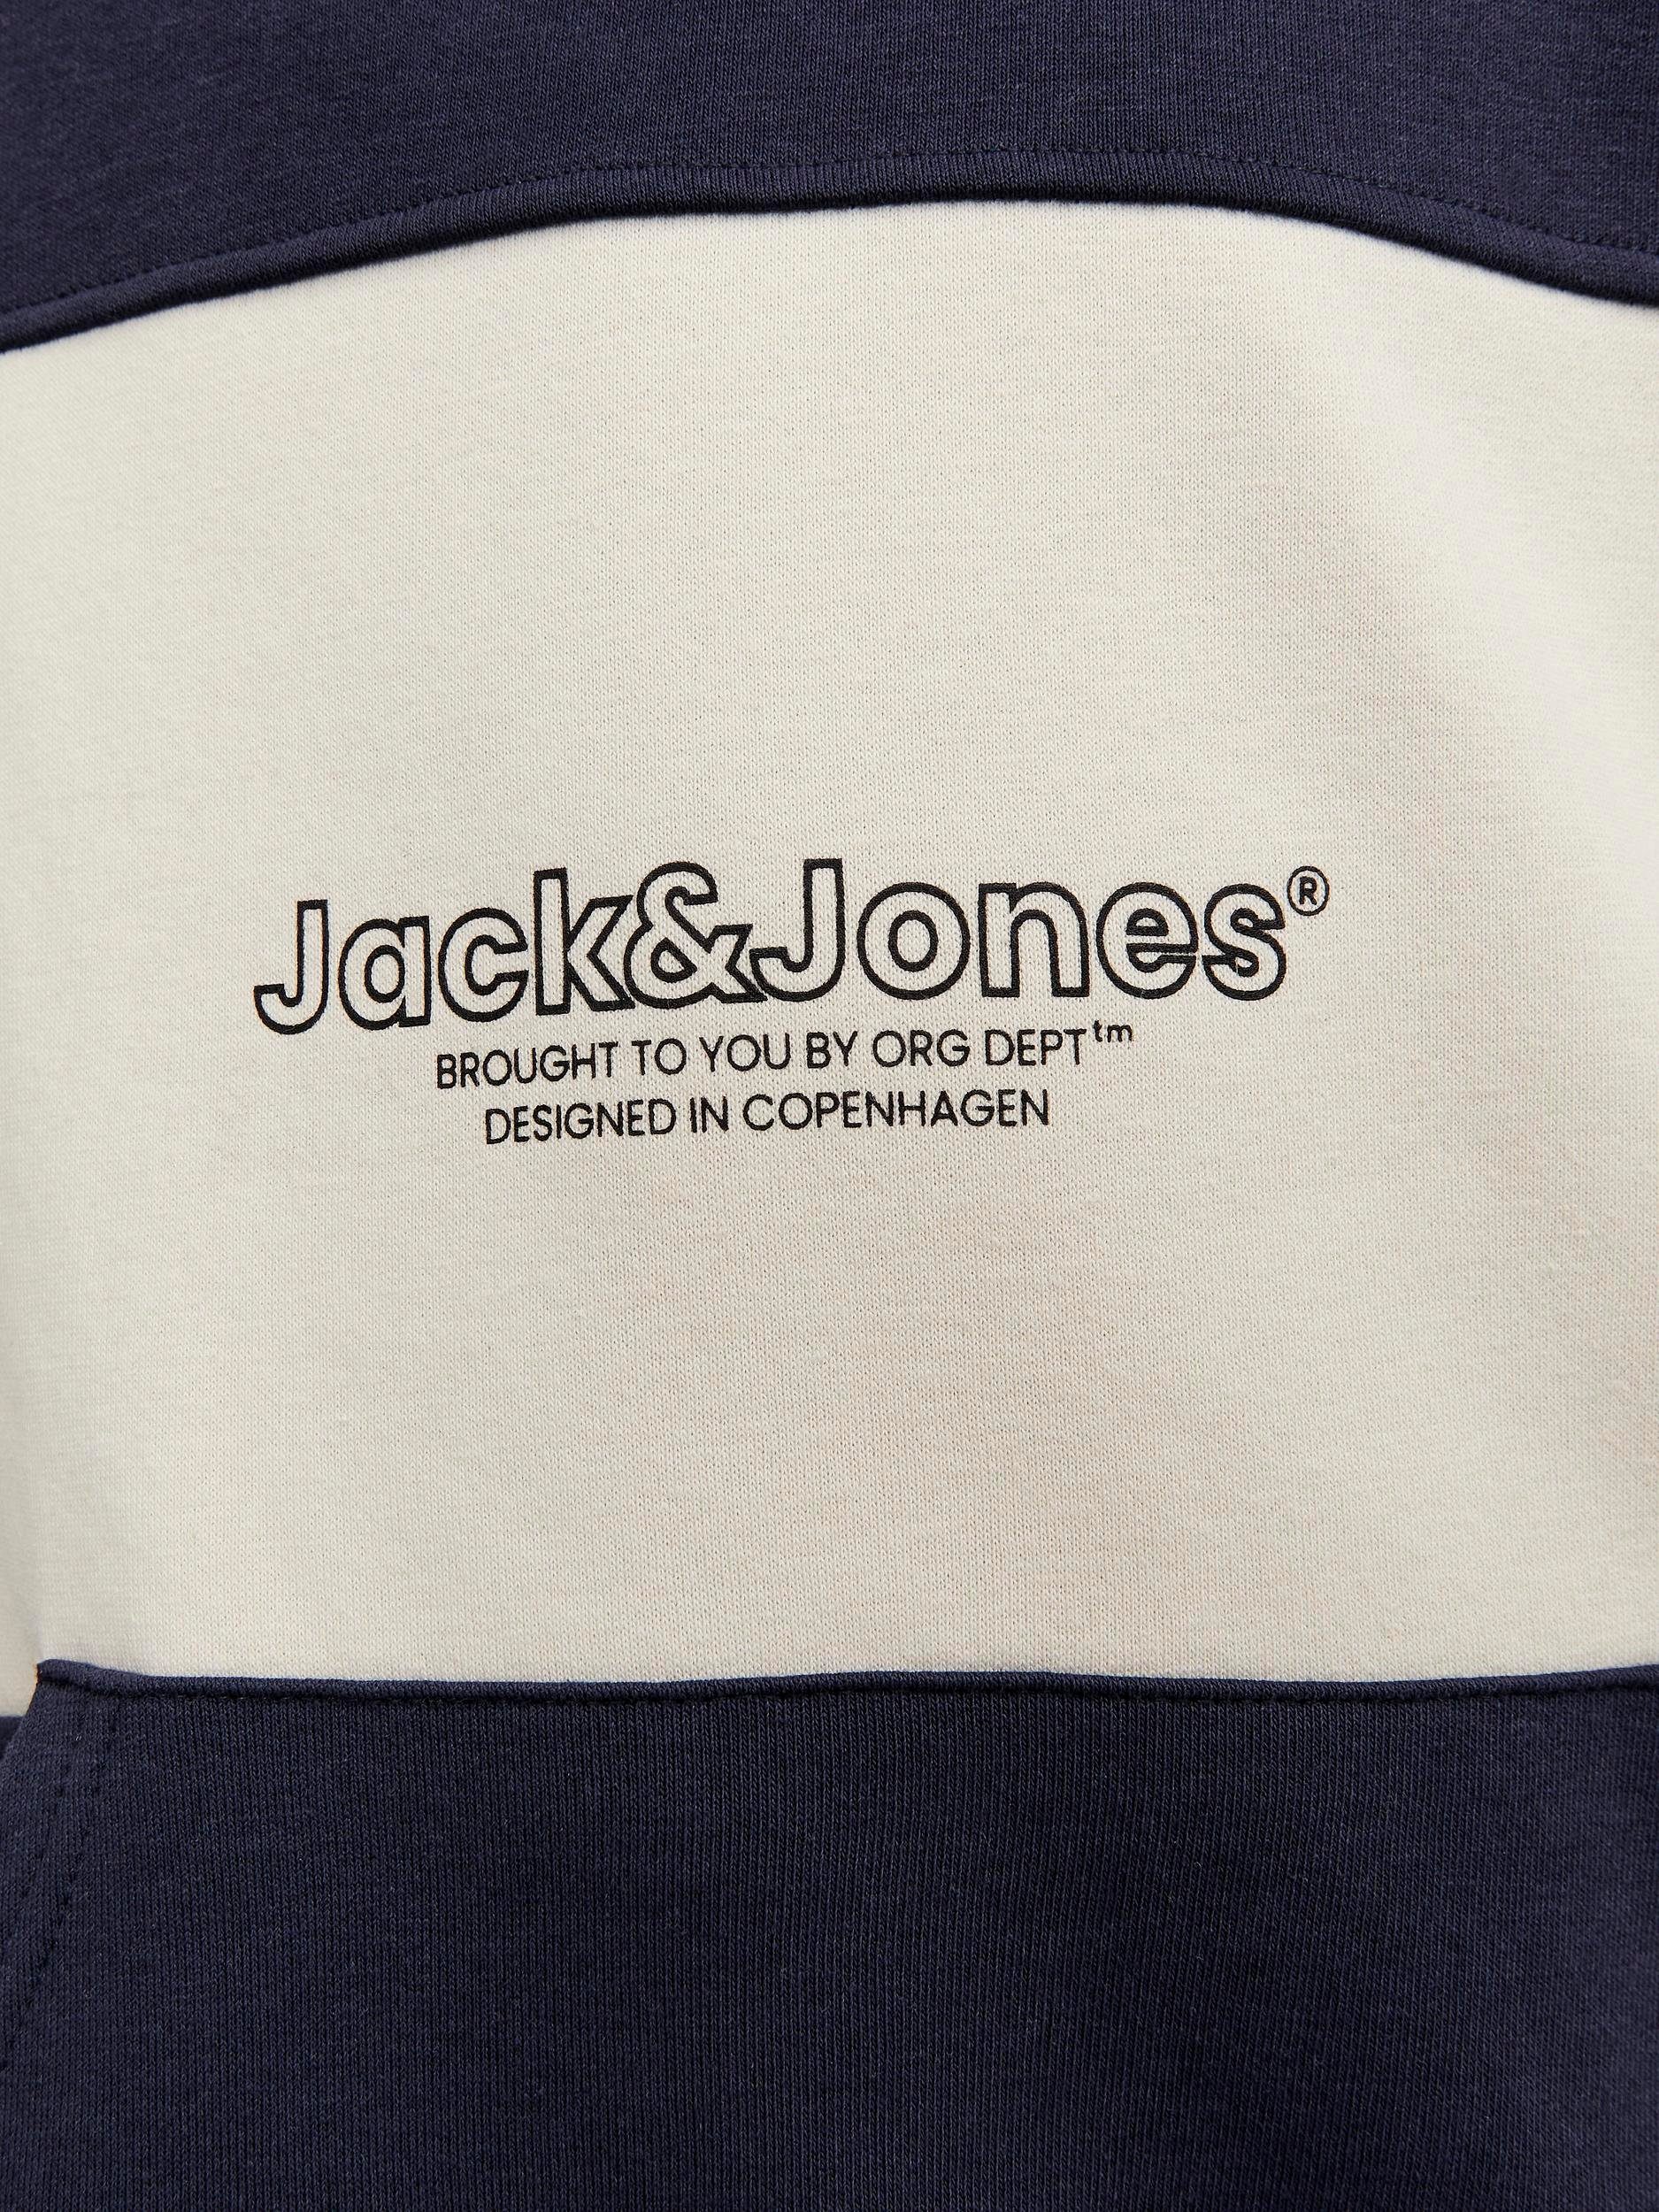 & Junior Jones blazer navy H Hoodie SWEAT BLOCK JORLAKEWOOD Jack